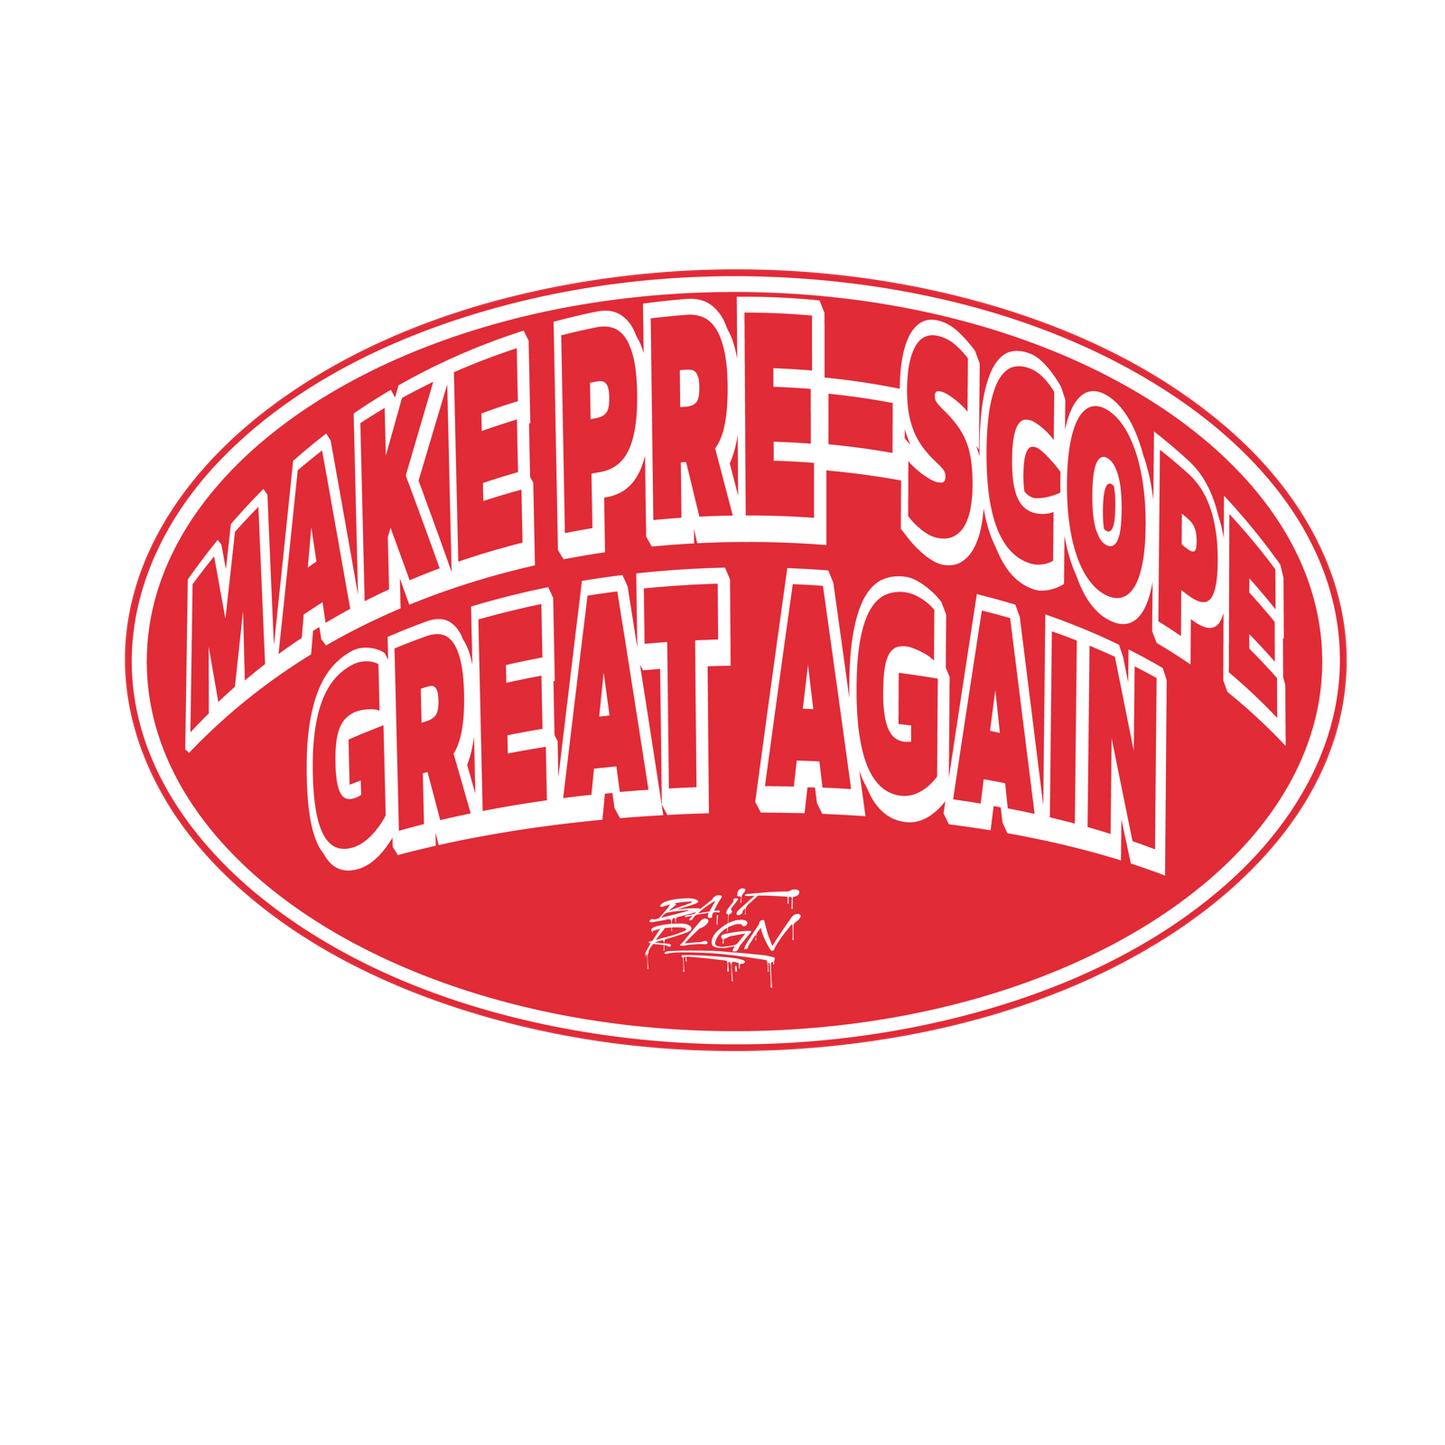 MAKE PRE-SCOPE GREAT AGAIN T-SHIRT